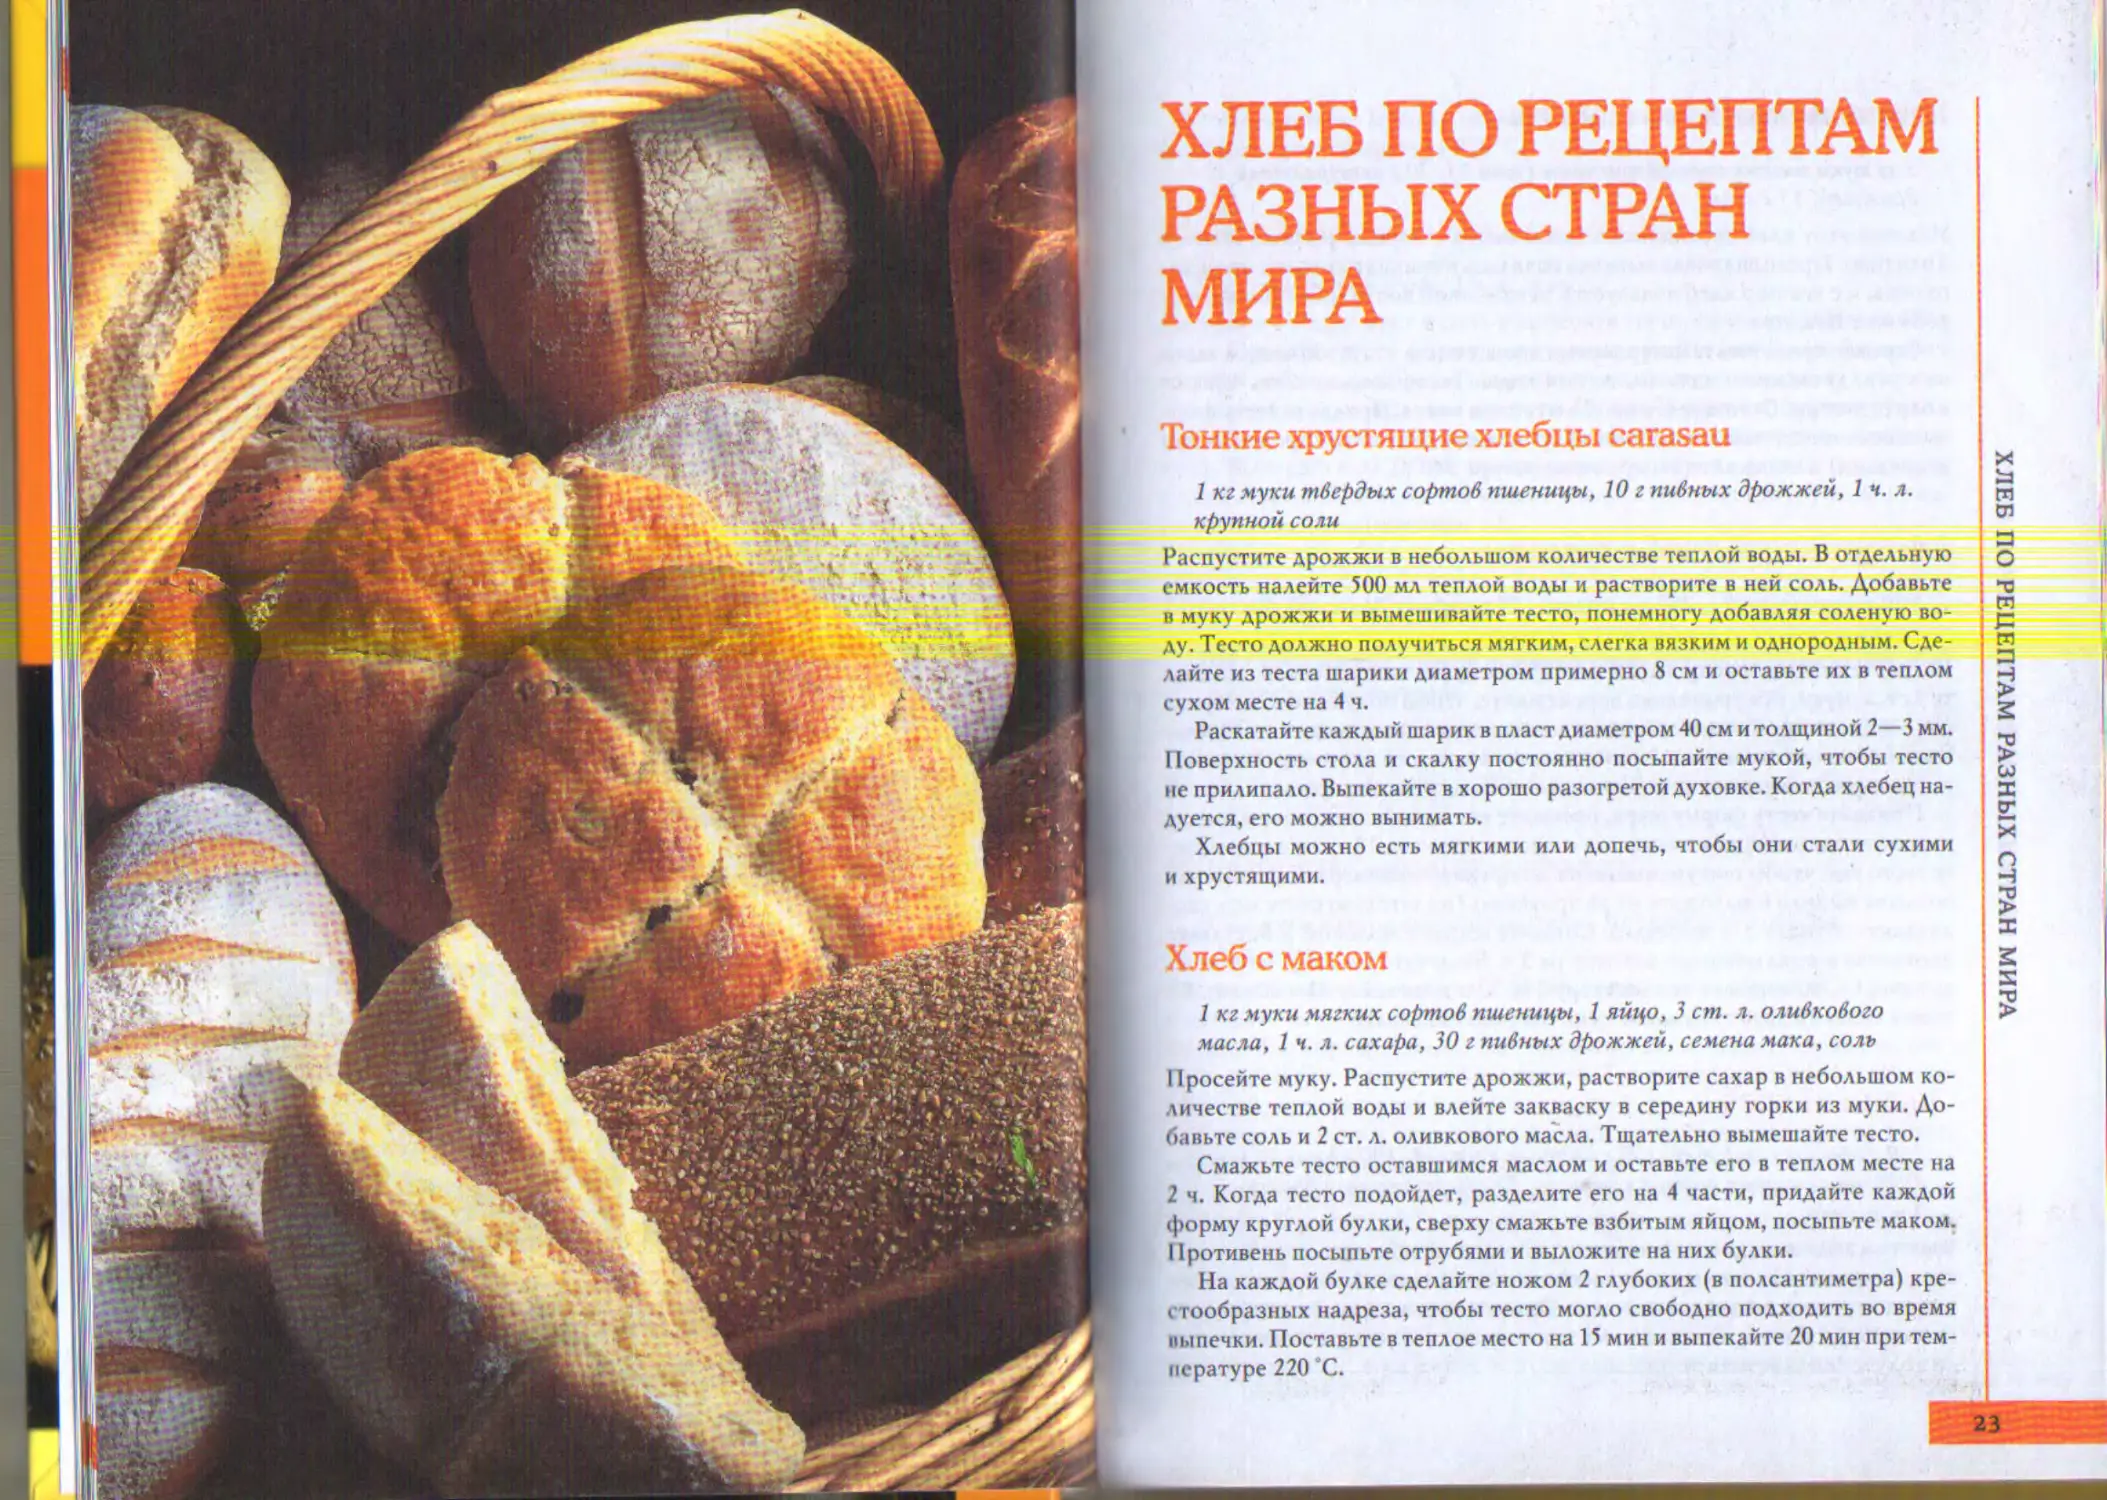 Книга рецептов хлеба